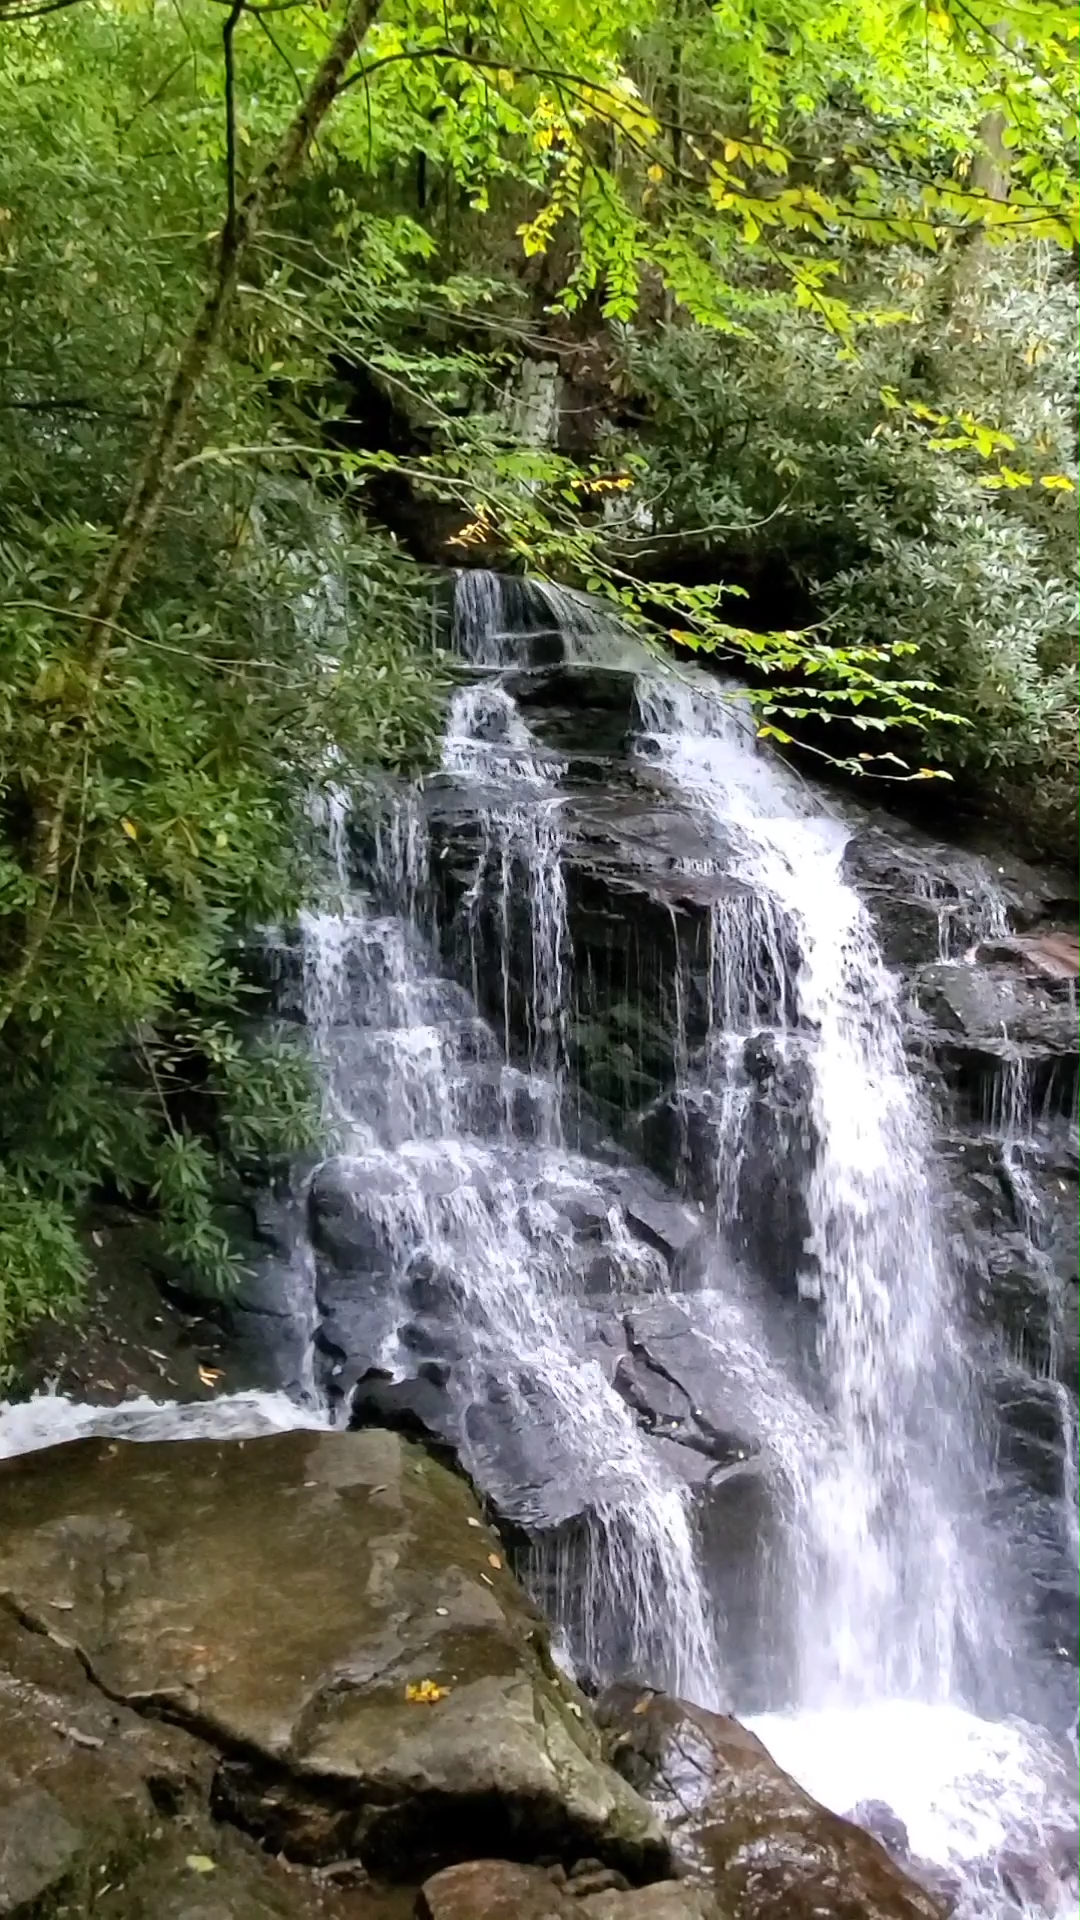 Amazing waterfalls to see in North Carolina